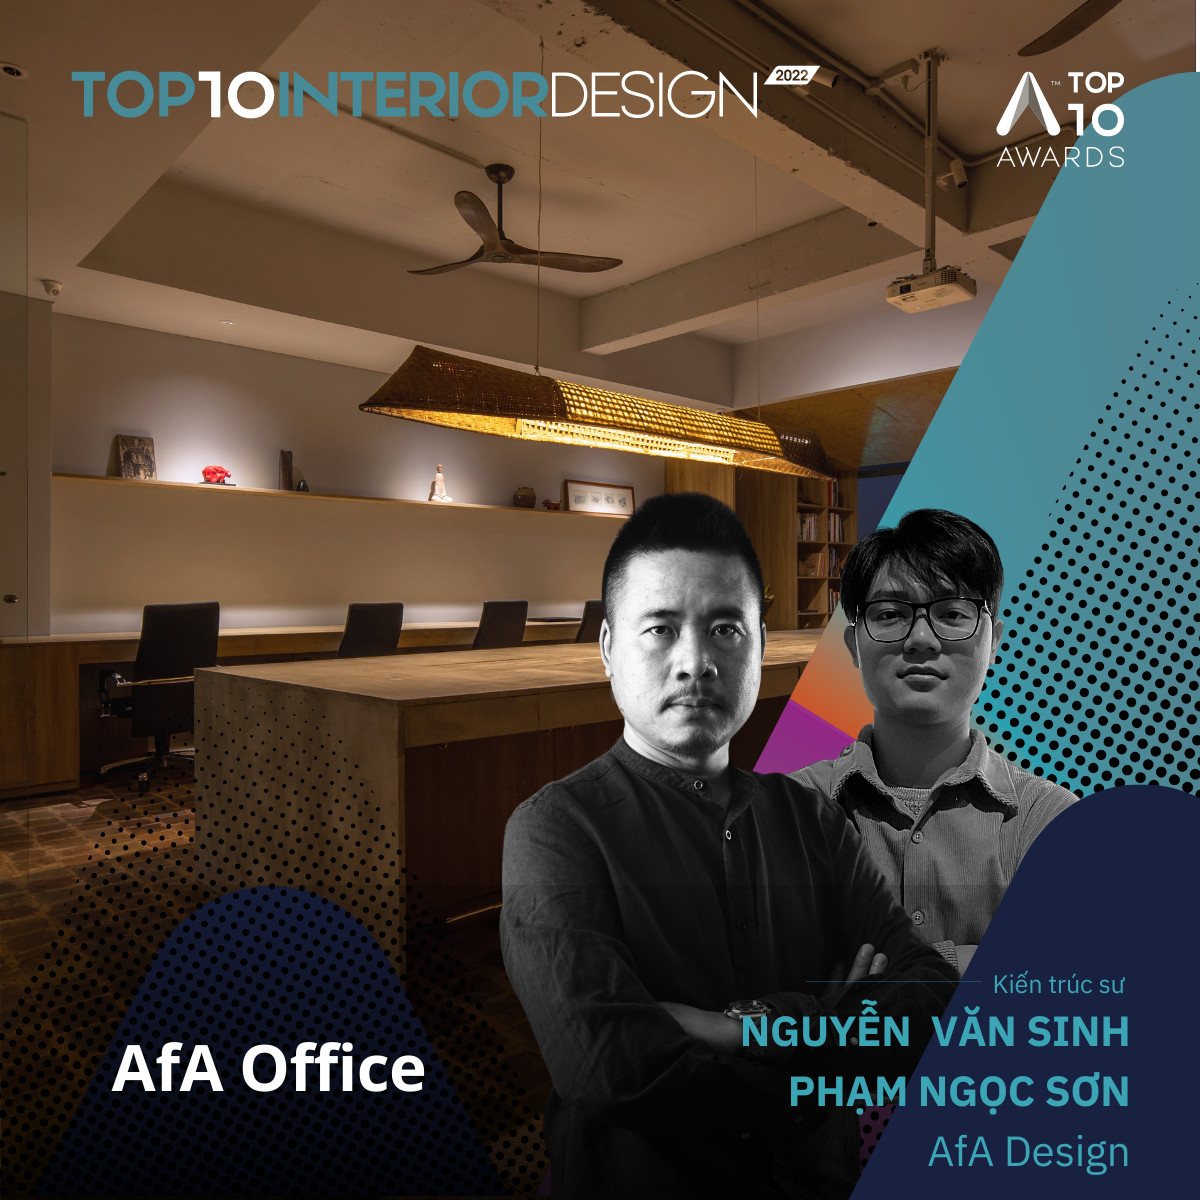 VĂN PHÒNG AFA DESIGN ĐẠT GIẢI TOP 10 INTERIOR DESIGN AWARDS